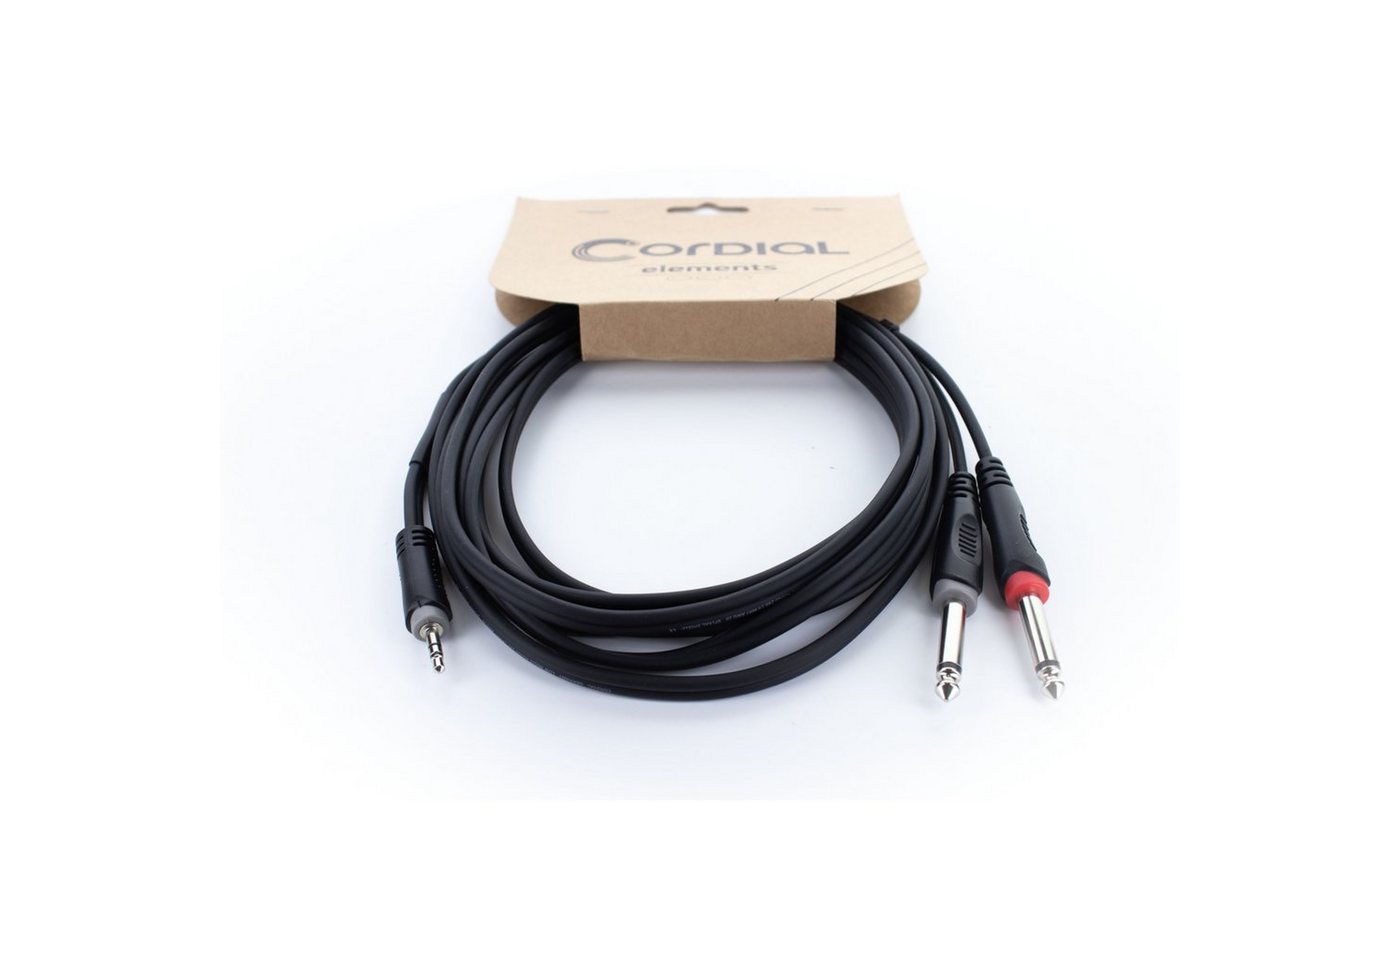 Cordial Audio-Kabel, EY 3 WPP Y-Adapterkabel 3 m - Insertkabel von Cordial